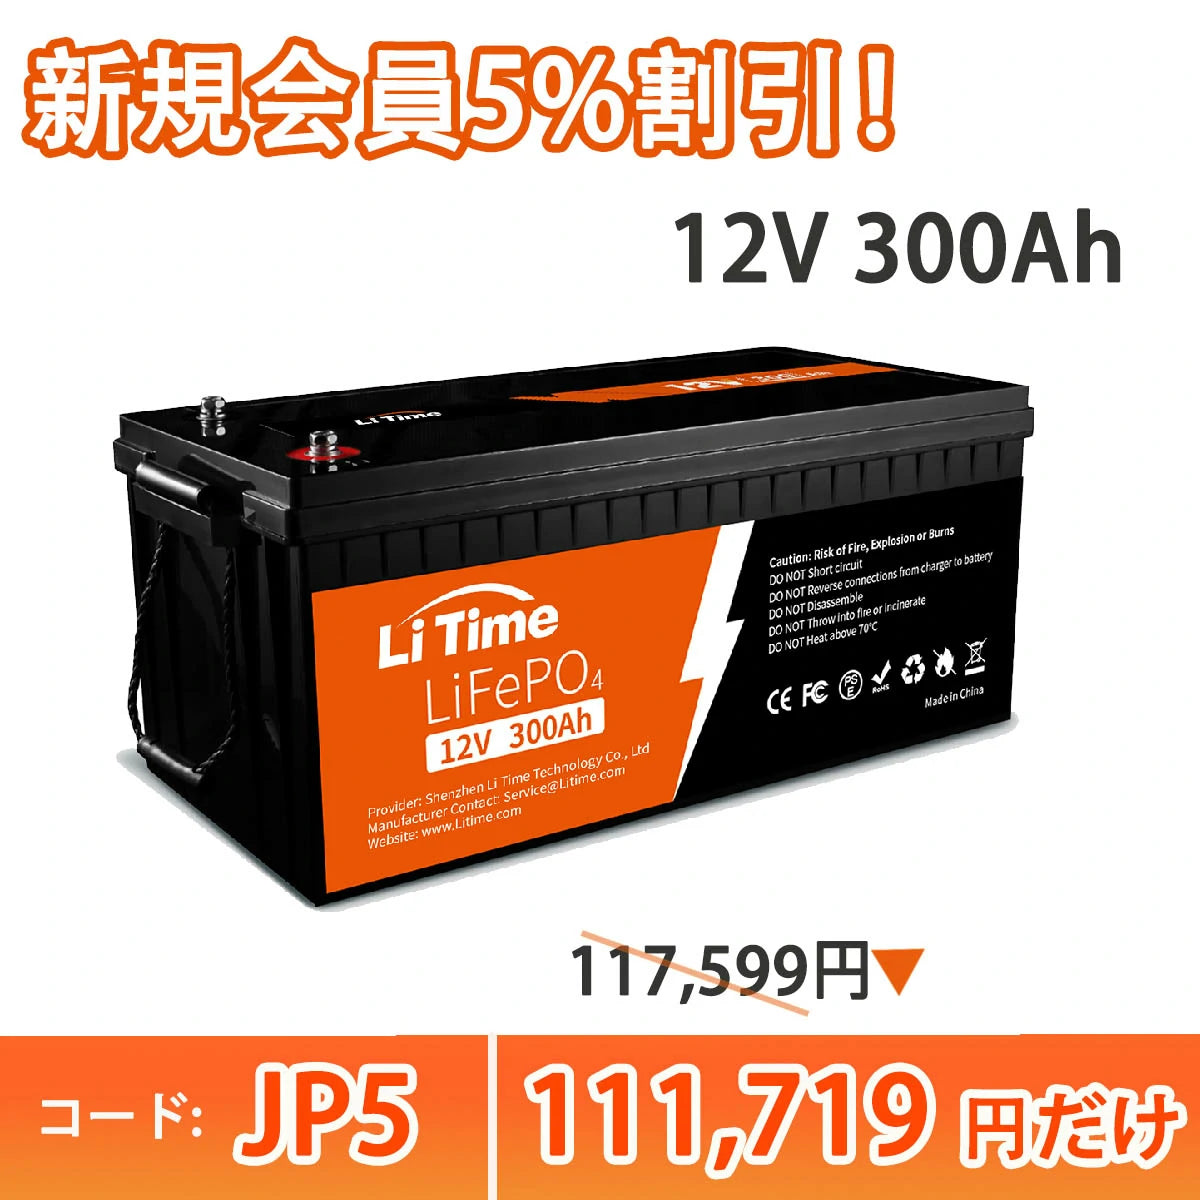 LiTime 12V 300Ah LiFePO4 リン酸鉄リチウムイオンバッテリー 内蔵200A BMS https://jp.litime.com/products/12v300ah